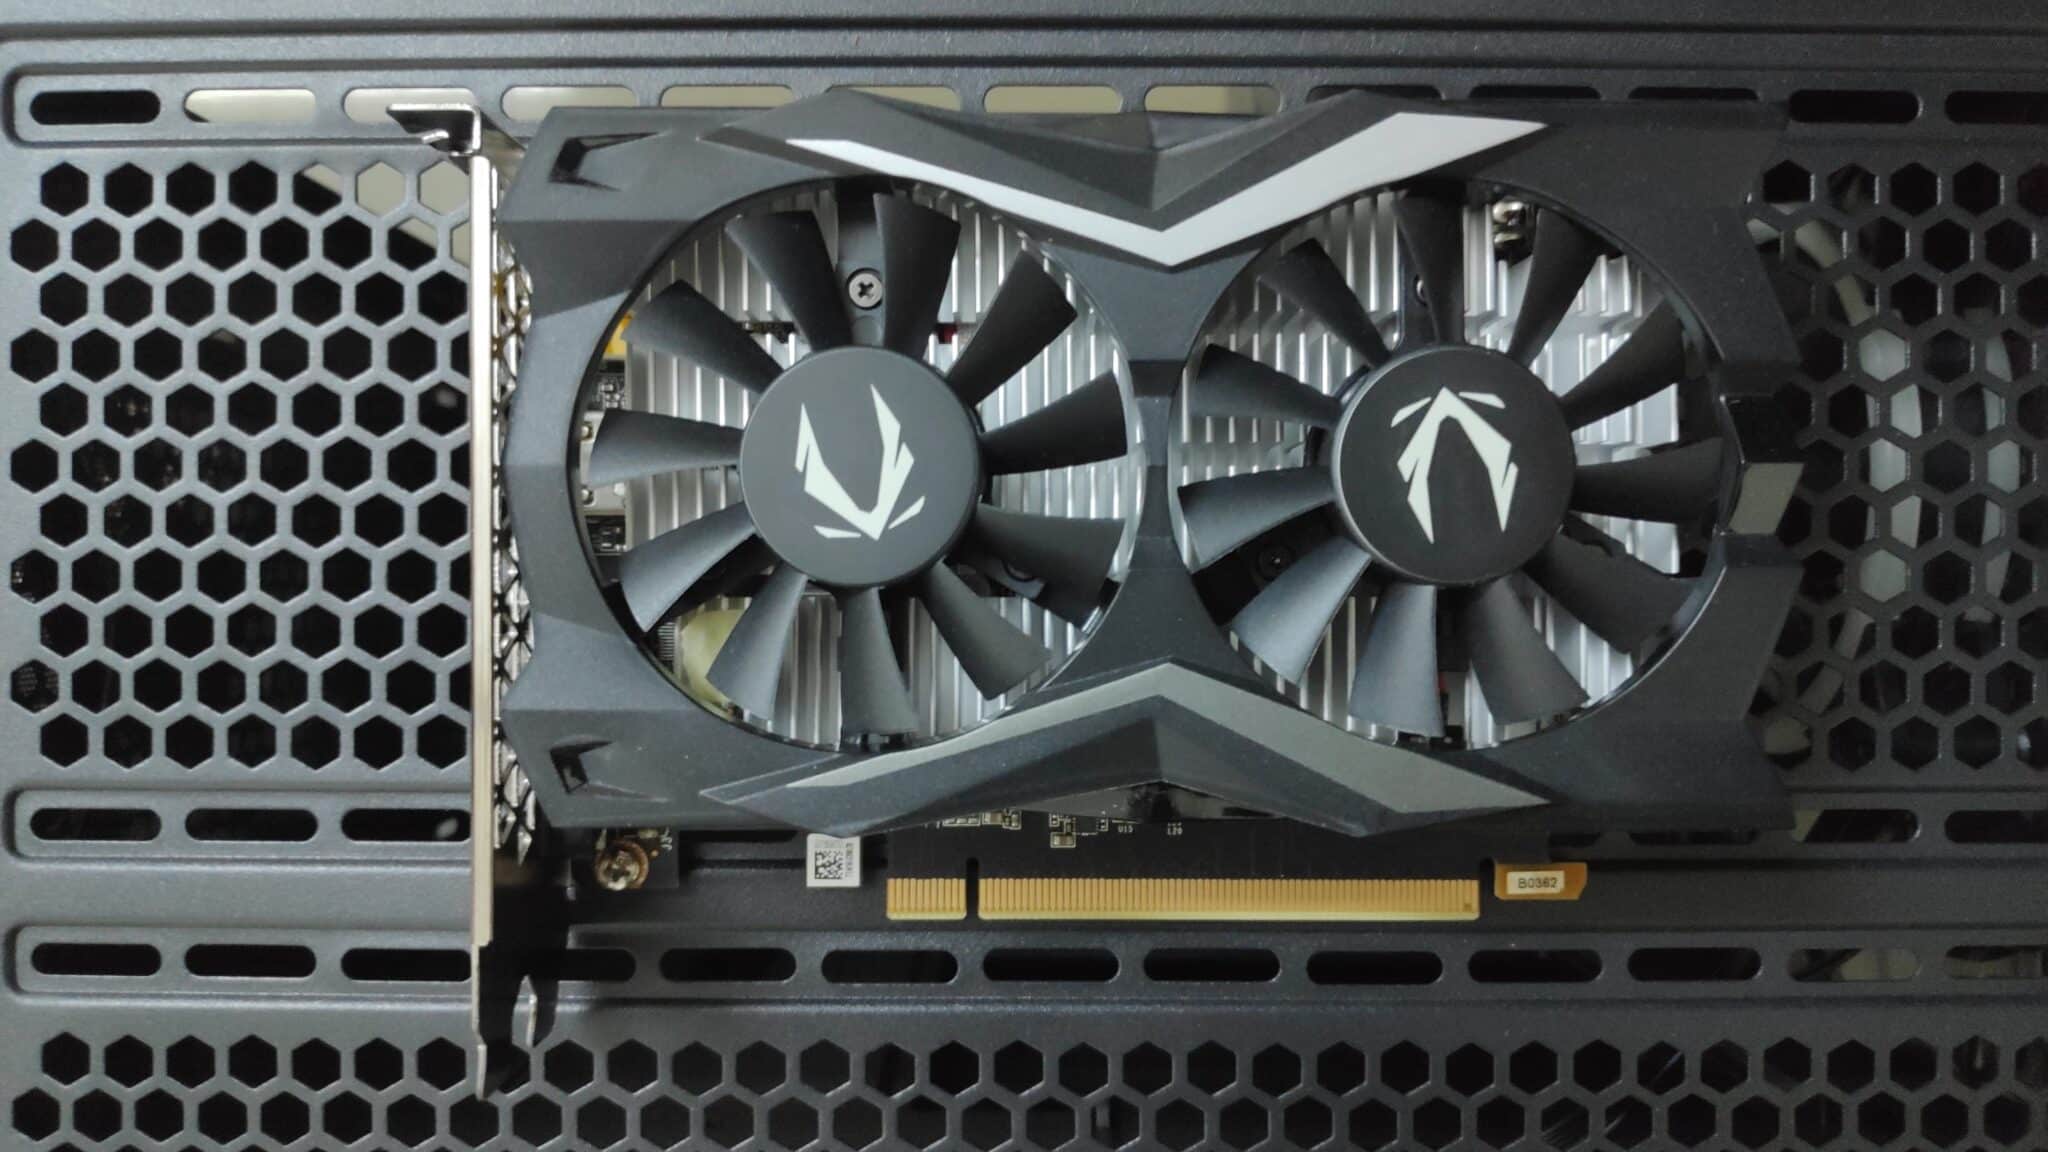 Zotac GeForce GTX 1650 Super 4GB Review: Gaming Performance, PCB